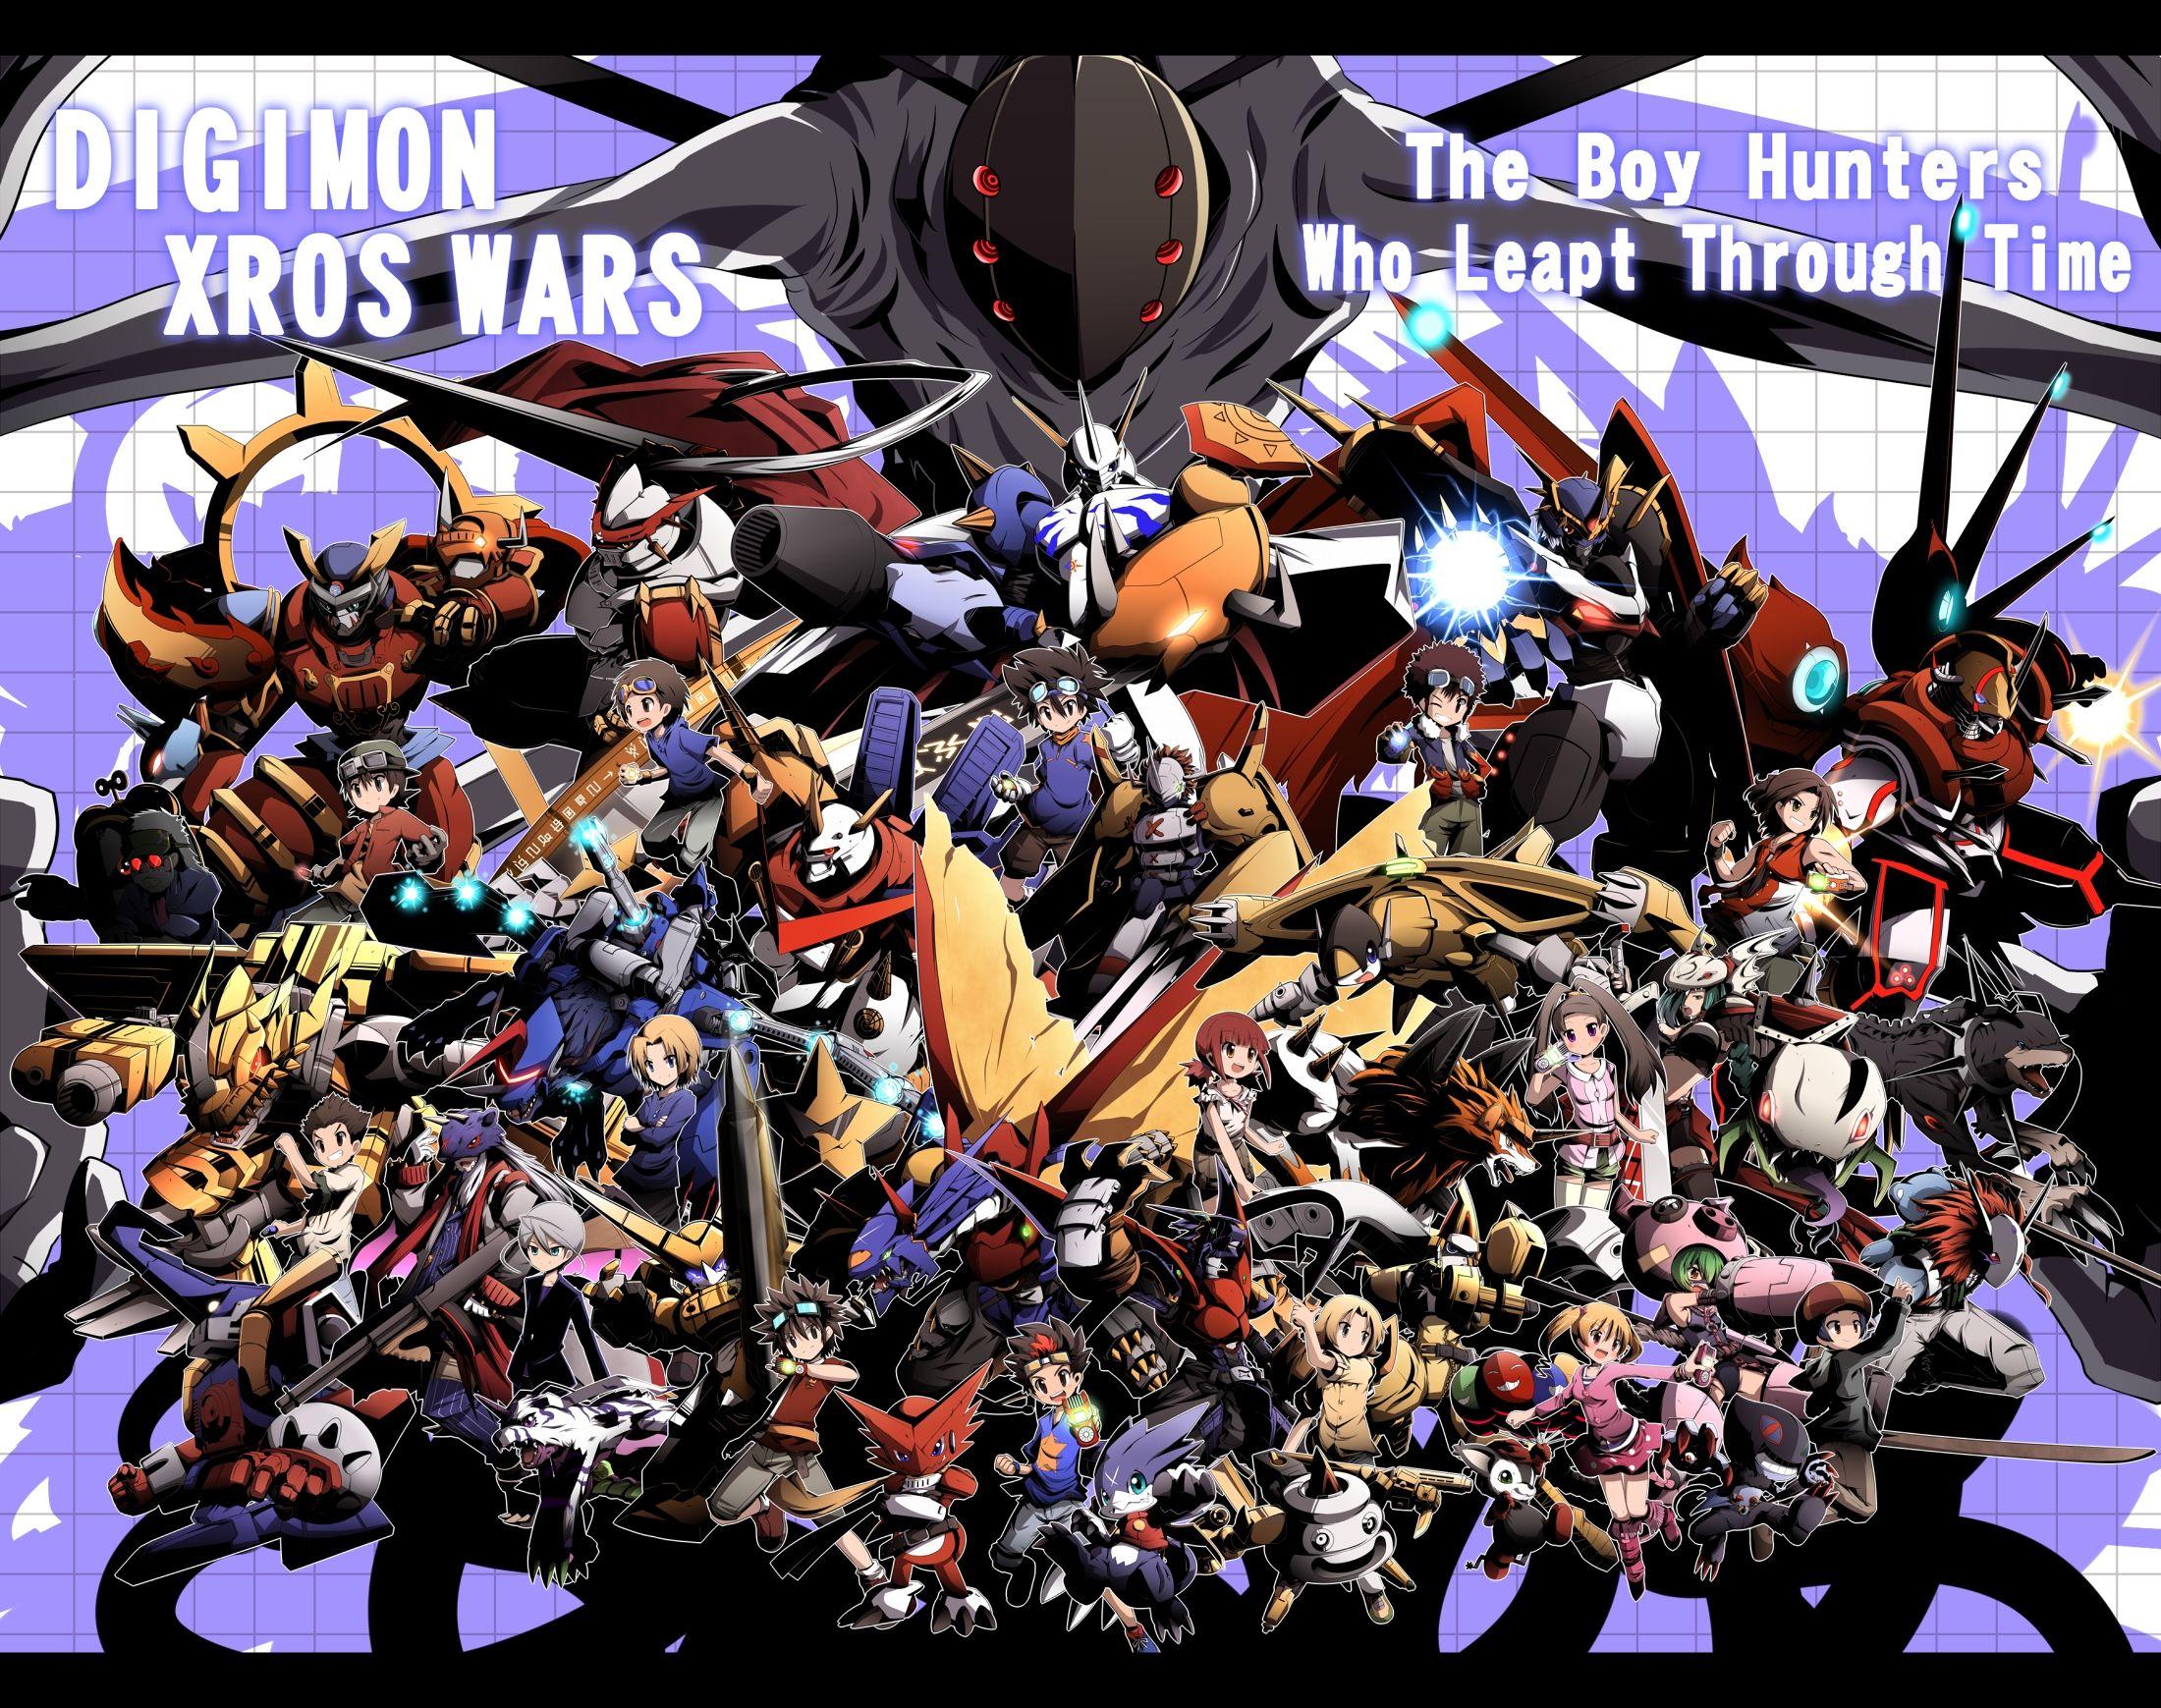 Digimon Xros Wars (Digimon Fusion) Anime Image Board